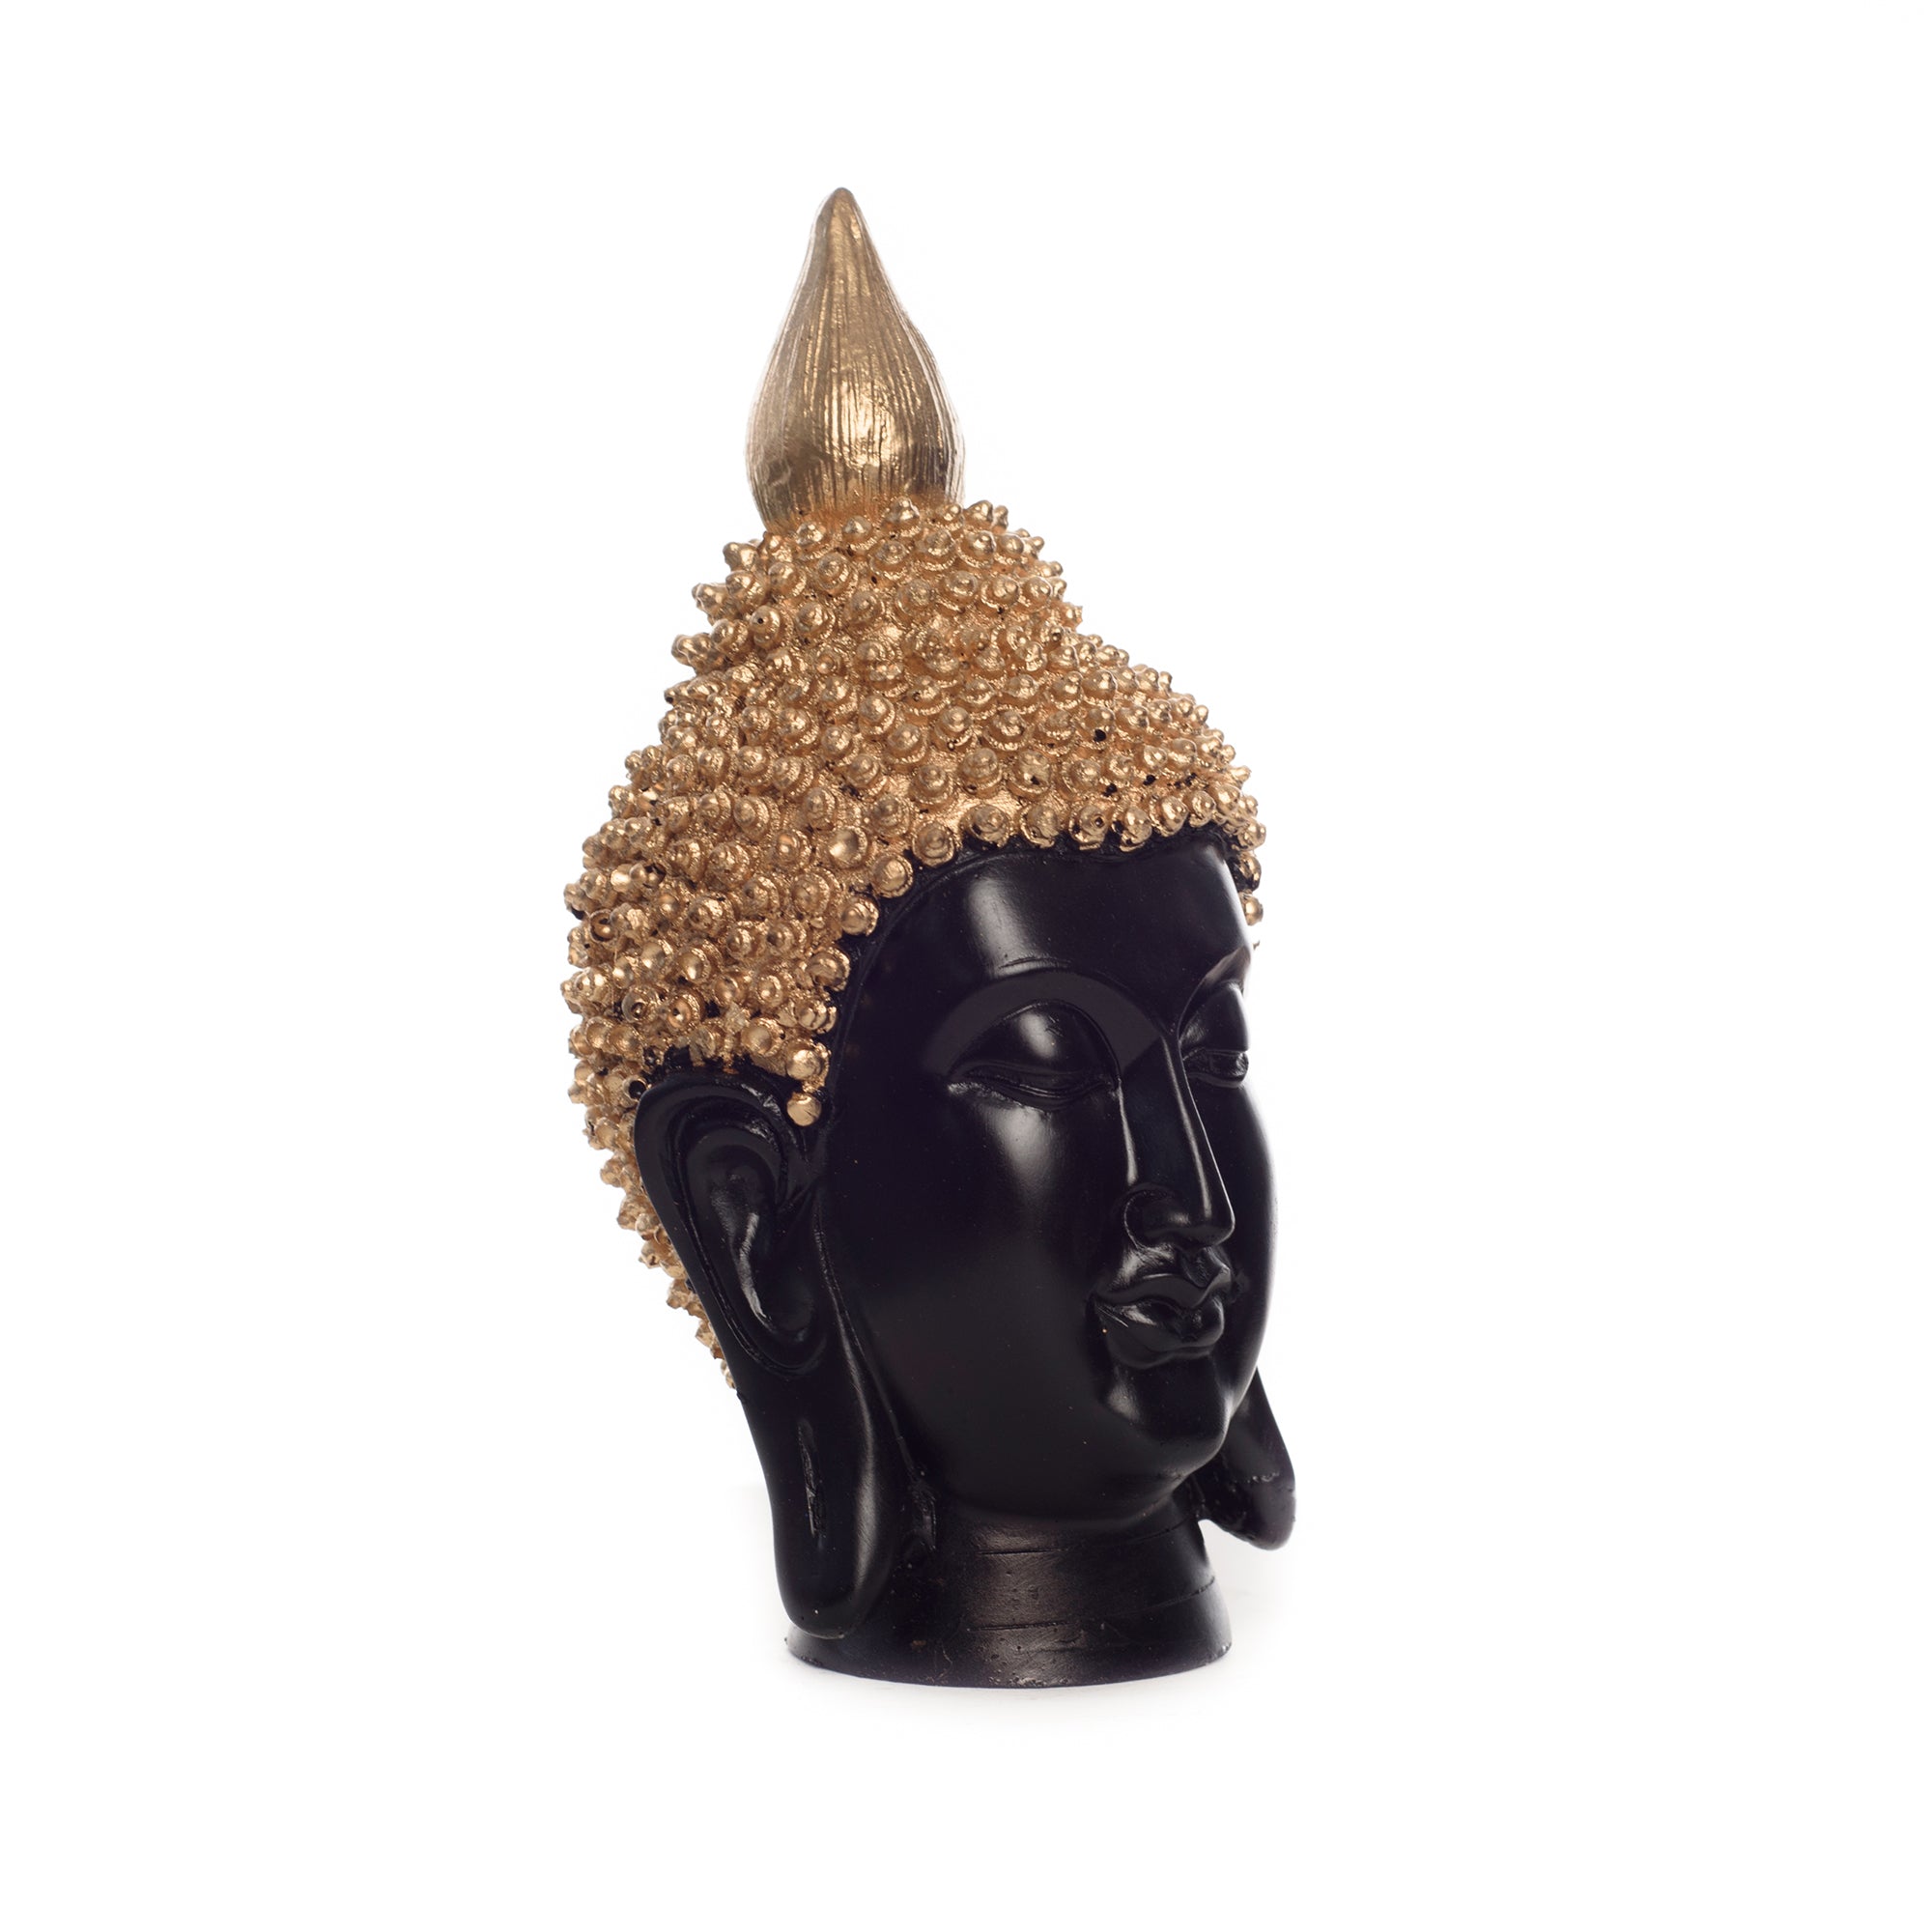 Polyresin Golden and Black Meditating Buddha Head Statue 3